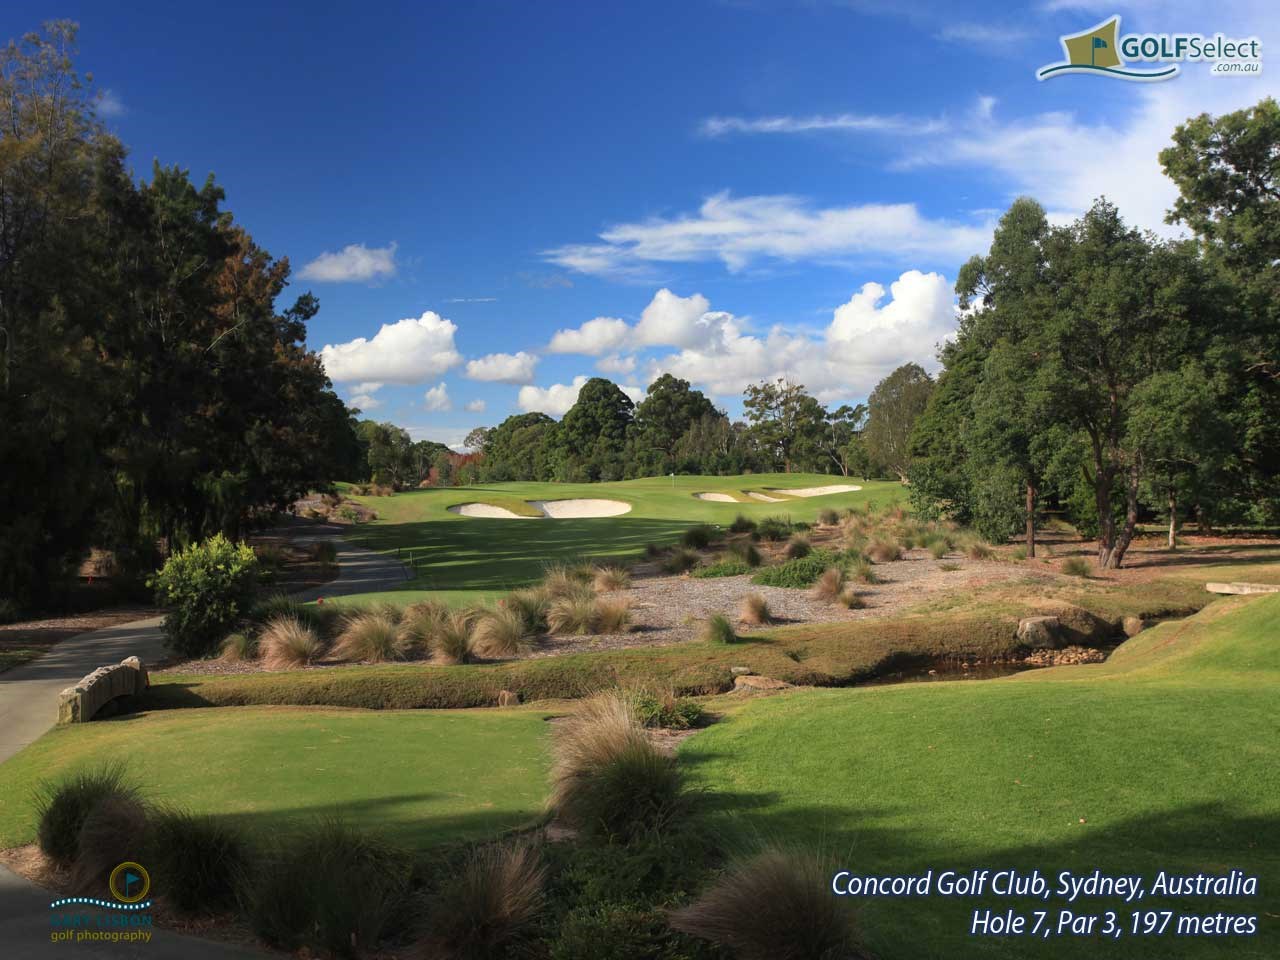 Concord Golf Club Hole 7, Par 3, 197 metres